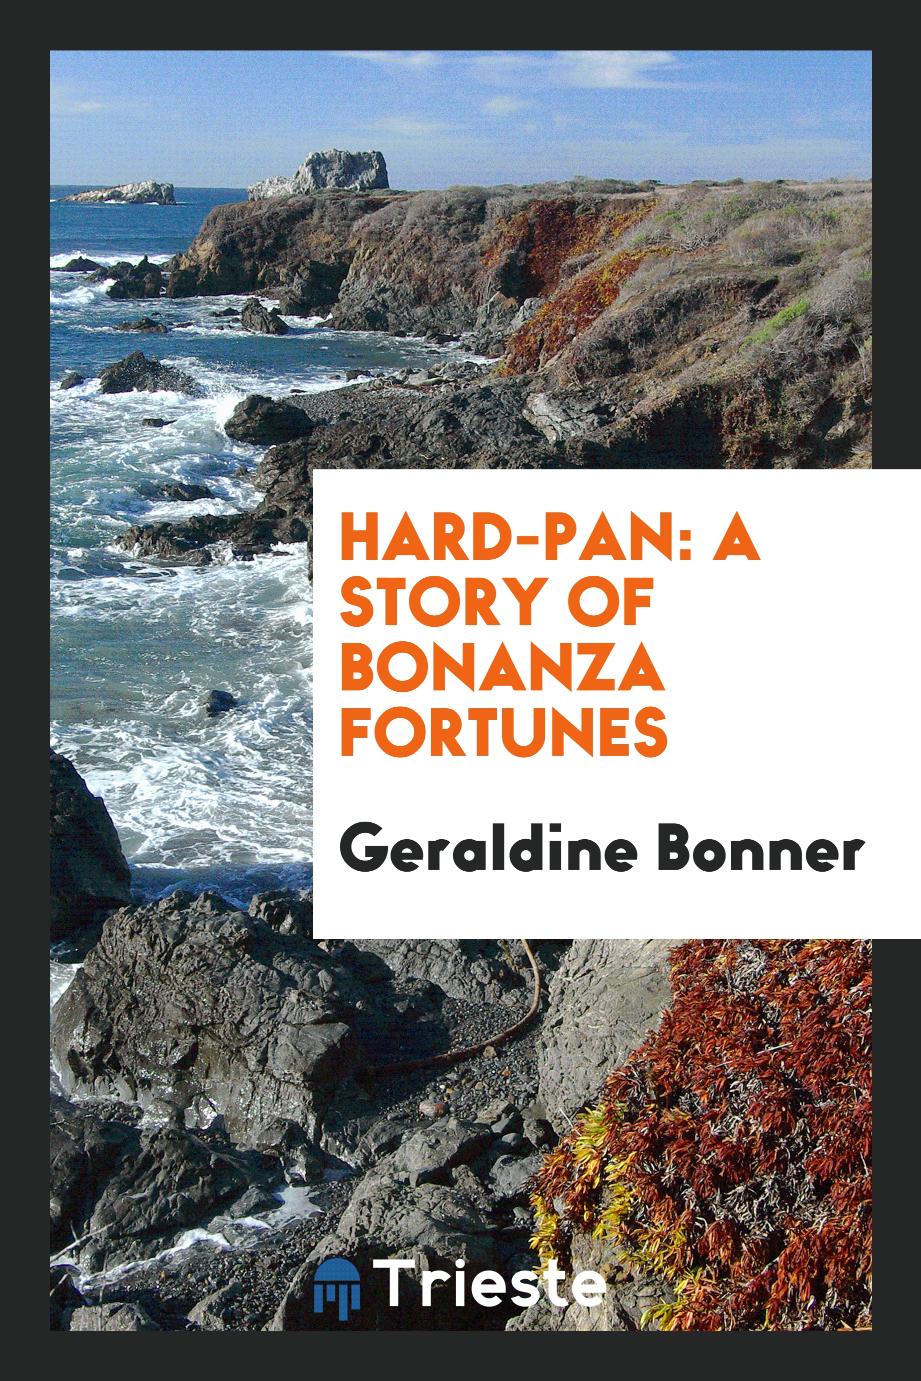 Hard-pan: a story of bonanza fortunes